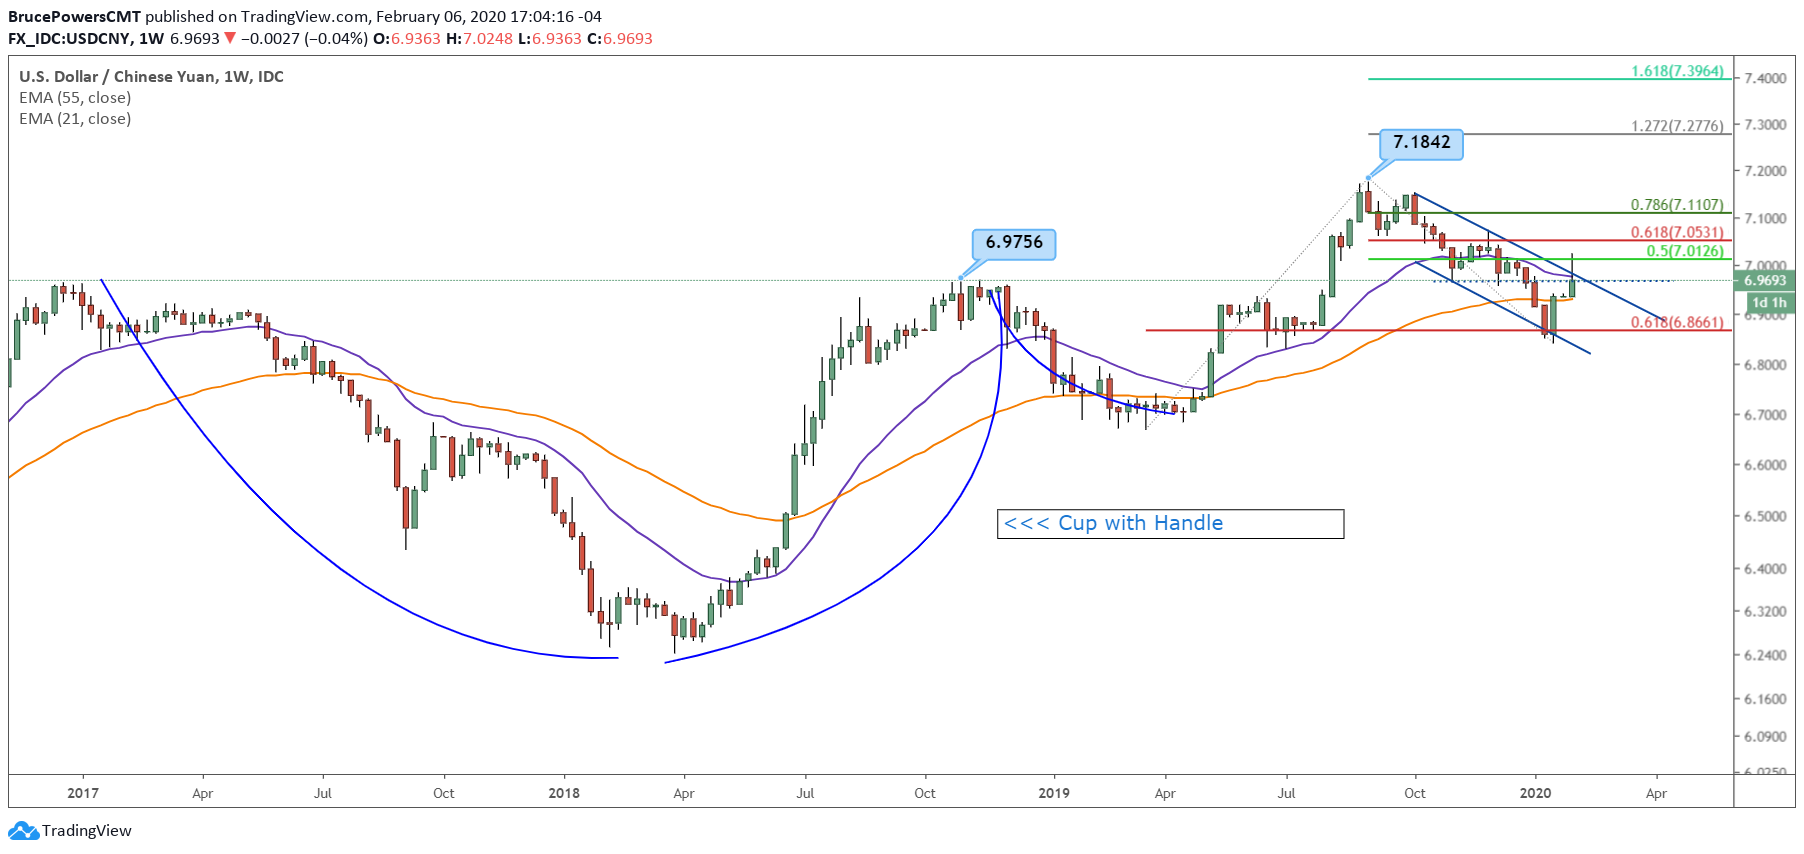 USD/CNY Weekly Chart